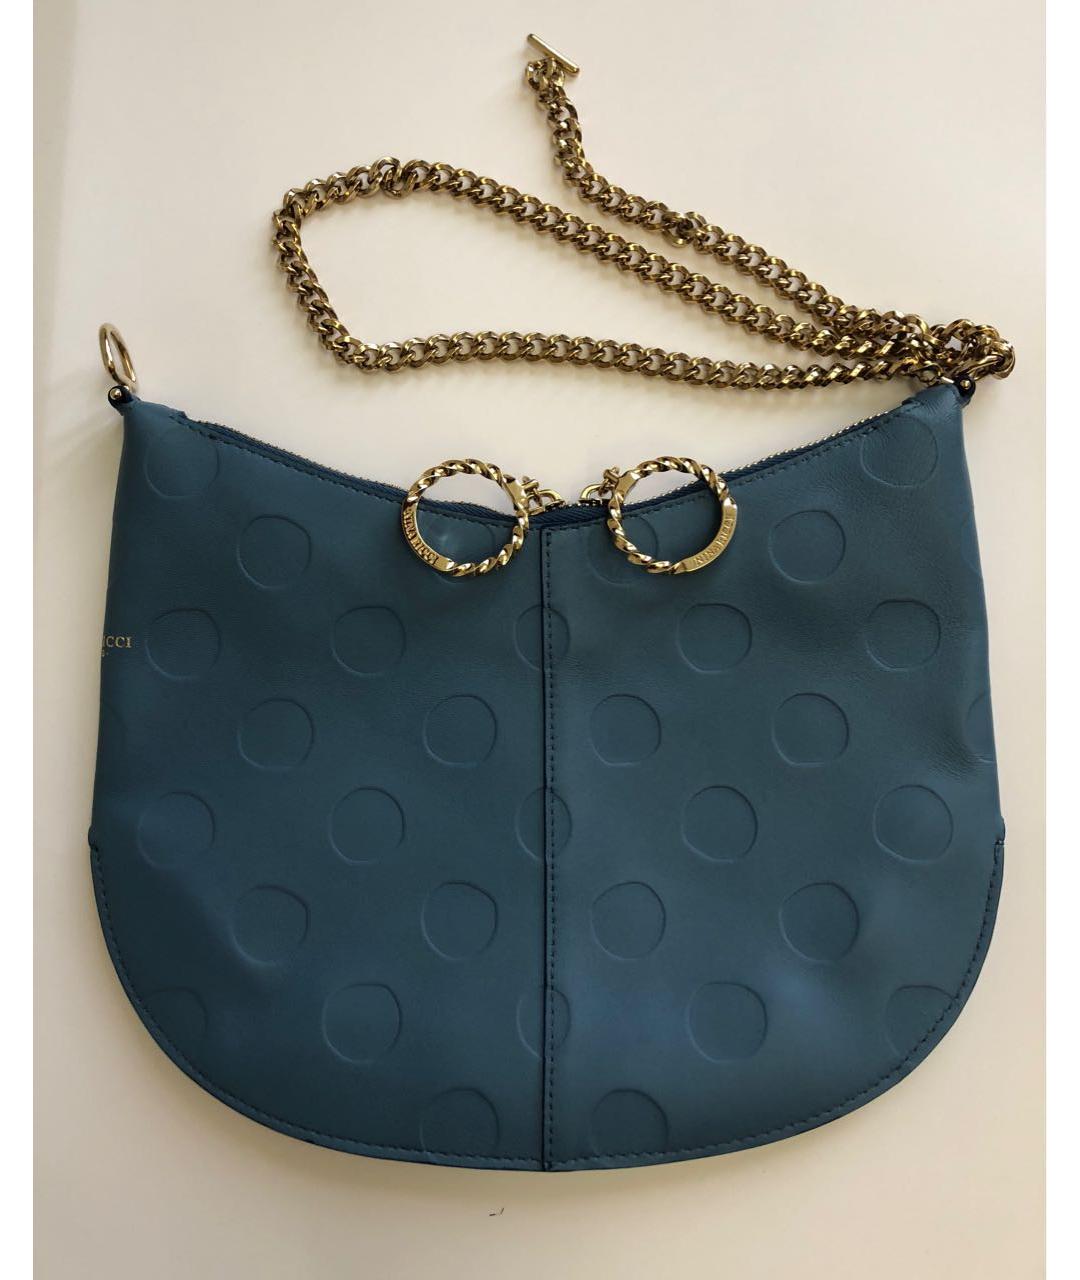 NINA RICCI PRE-OWNED Голубая кожаная сумка с короткими ручками, фото 2